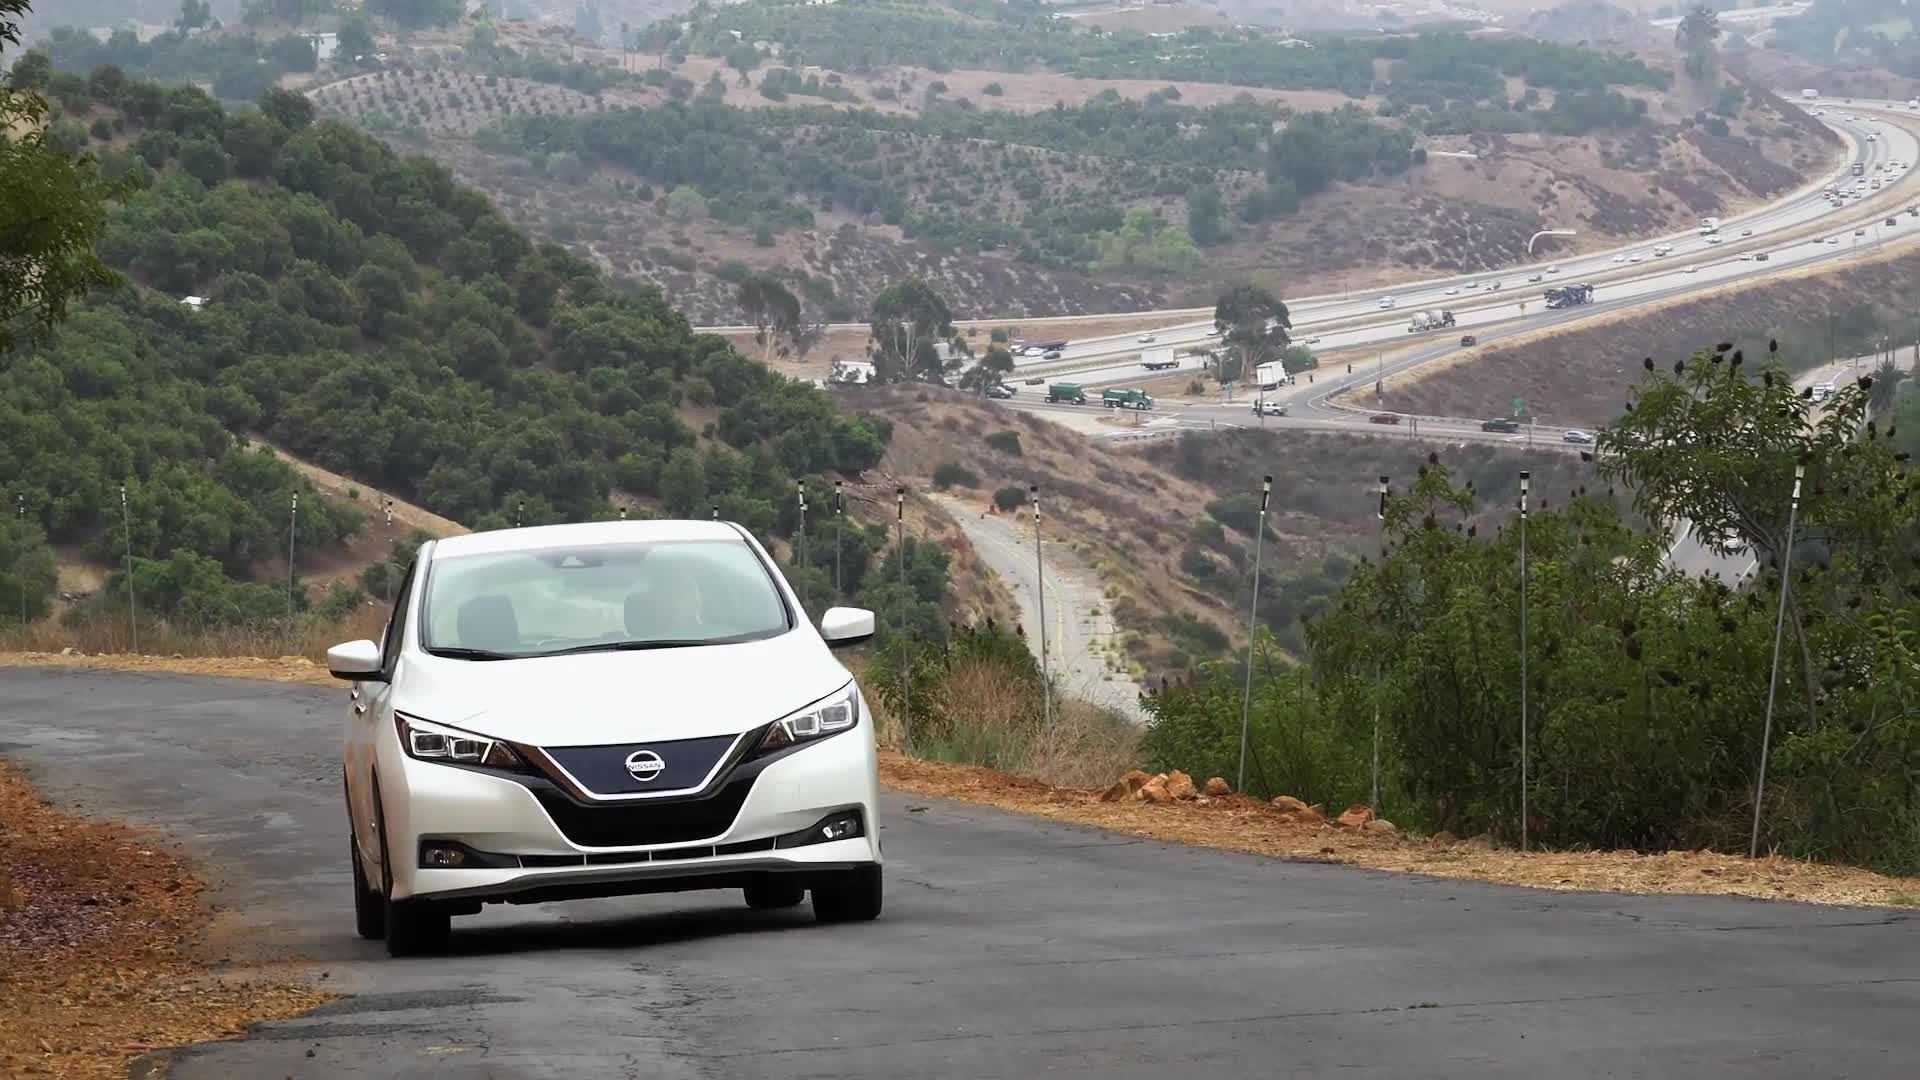 2020 Nissan Leaf Plus review: More power, more range - CNET